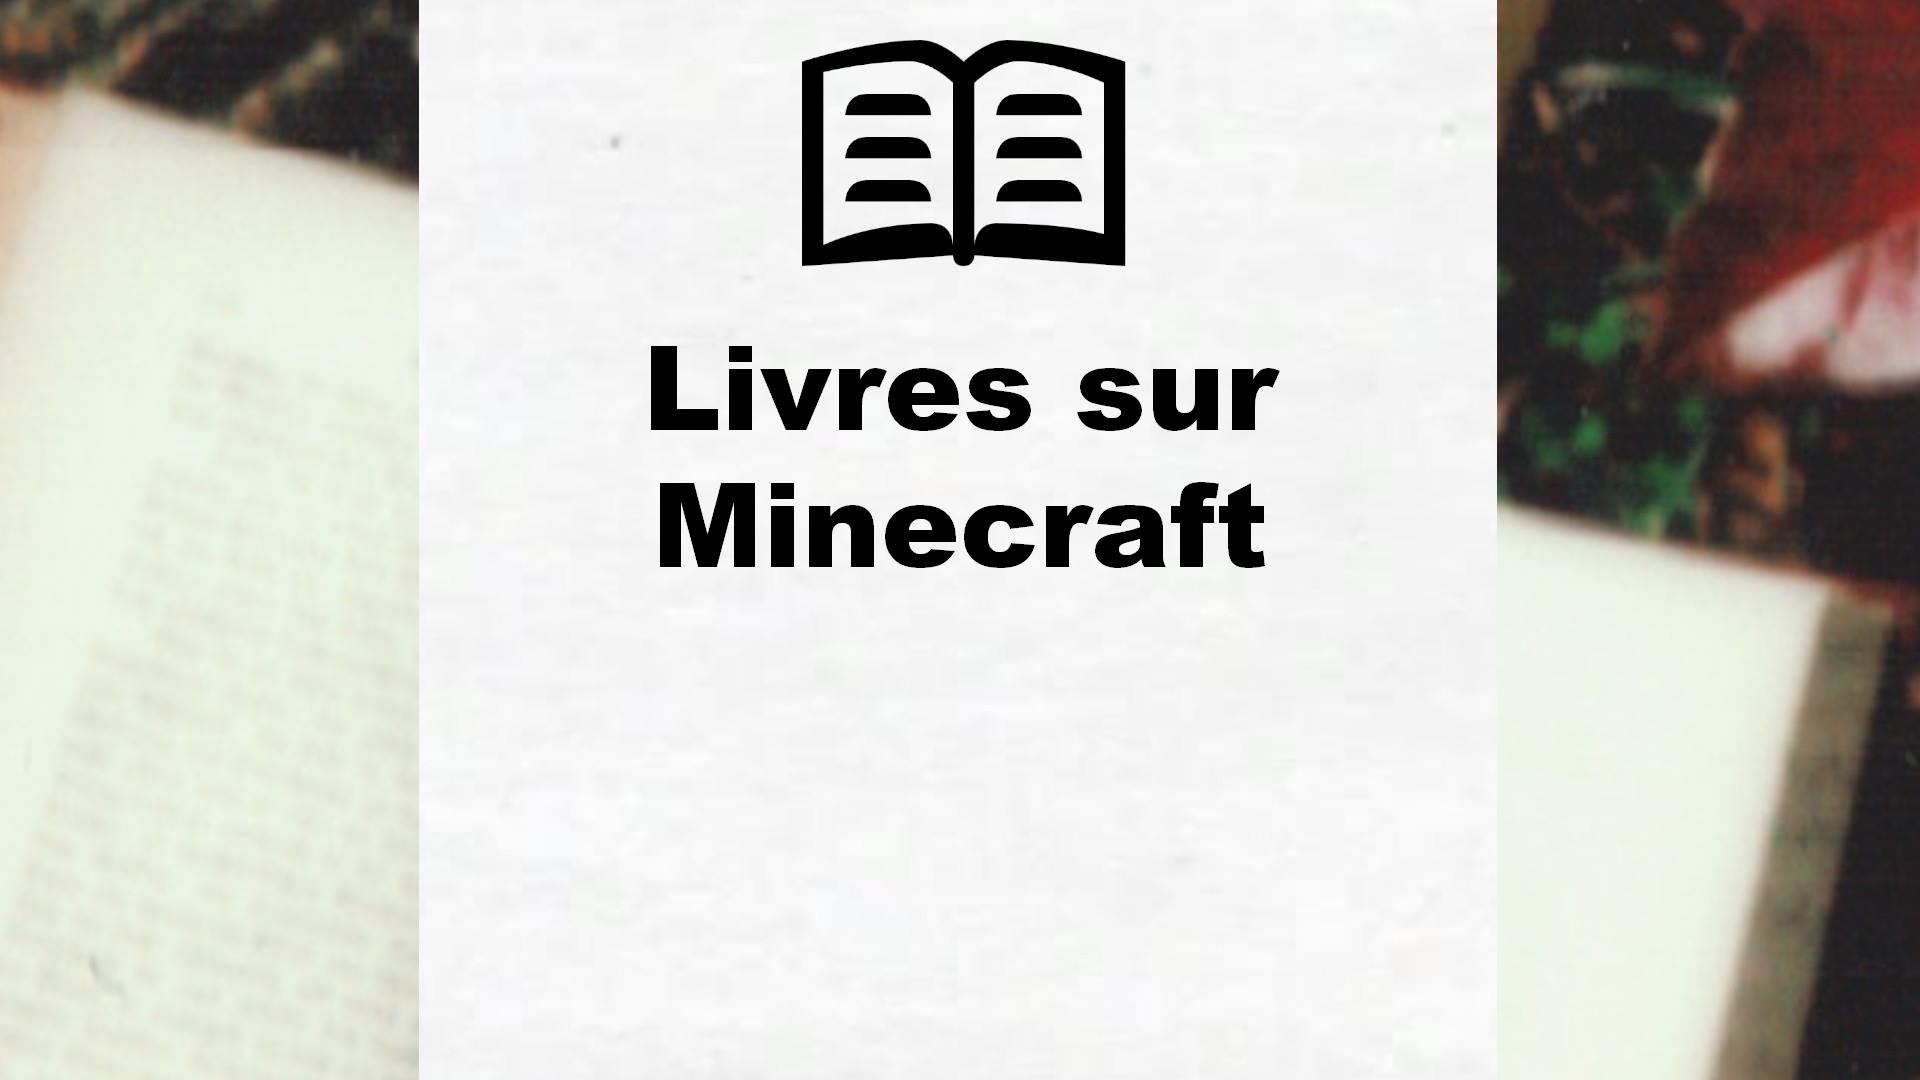 Livres sur Minecraft